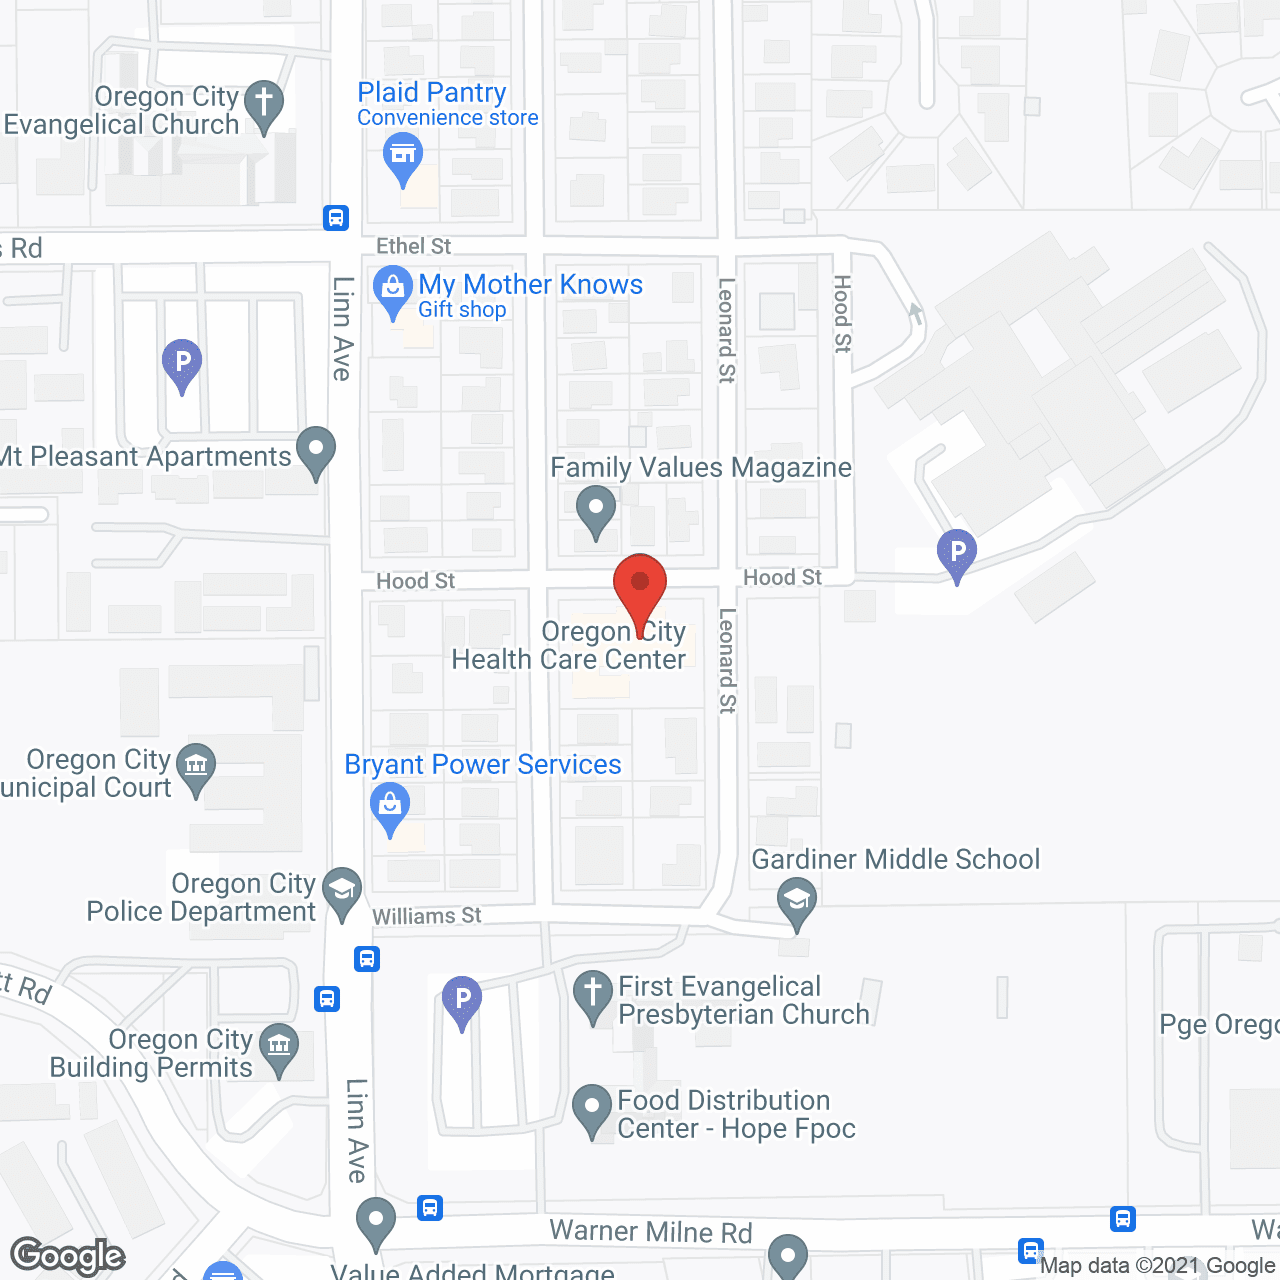 Oregon City Health Care Center in google map